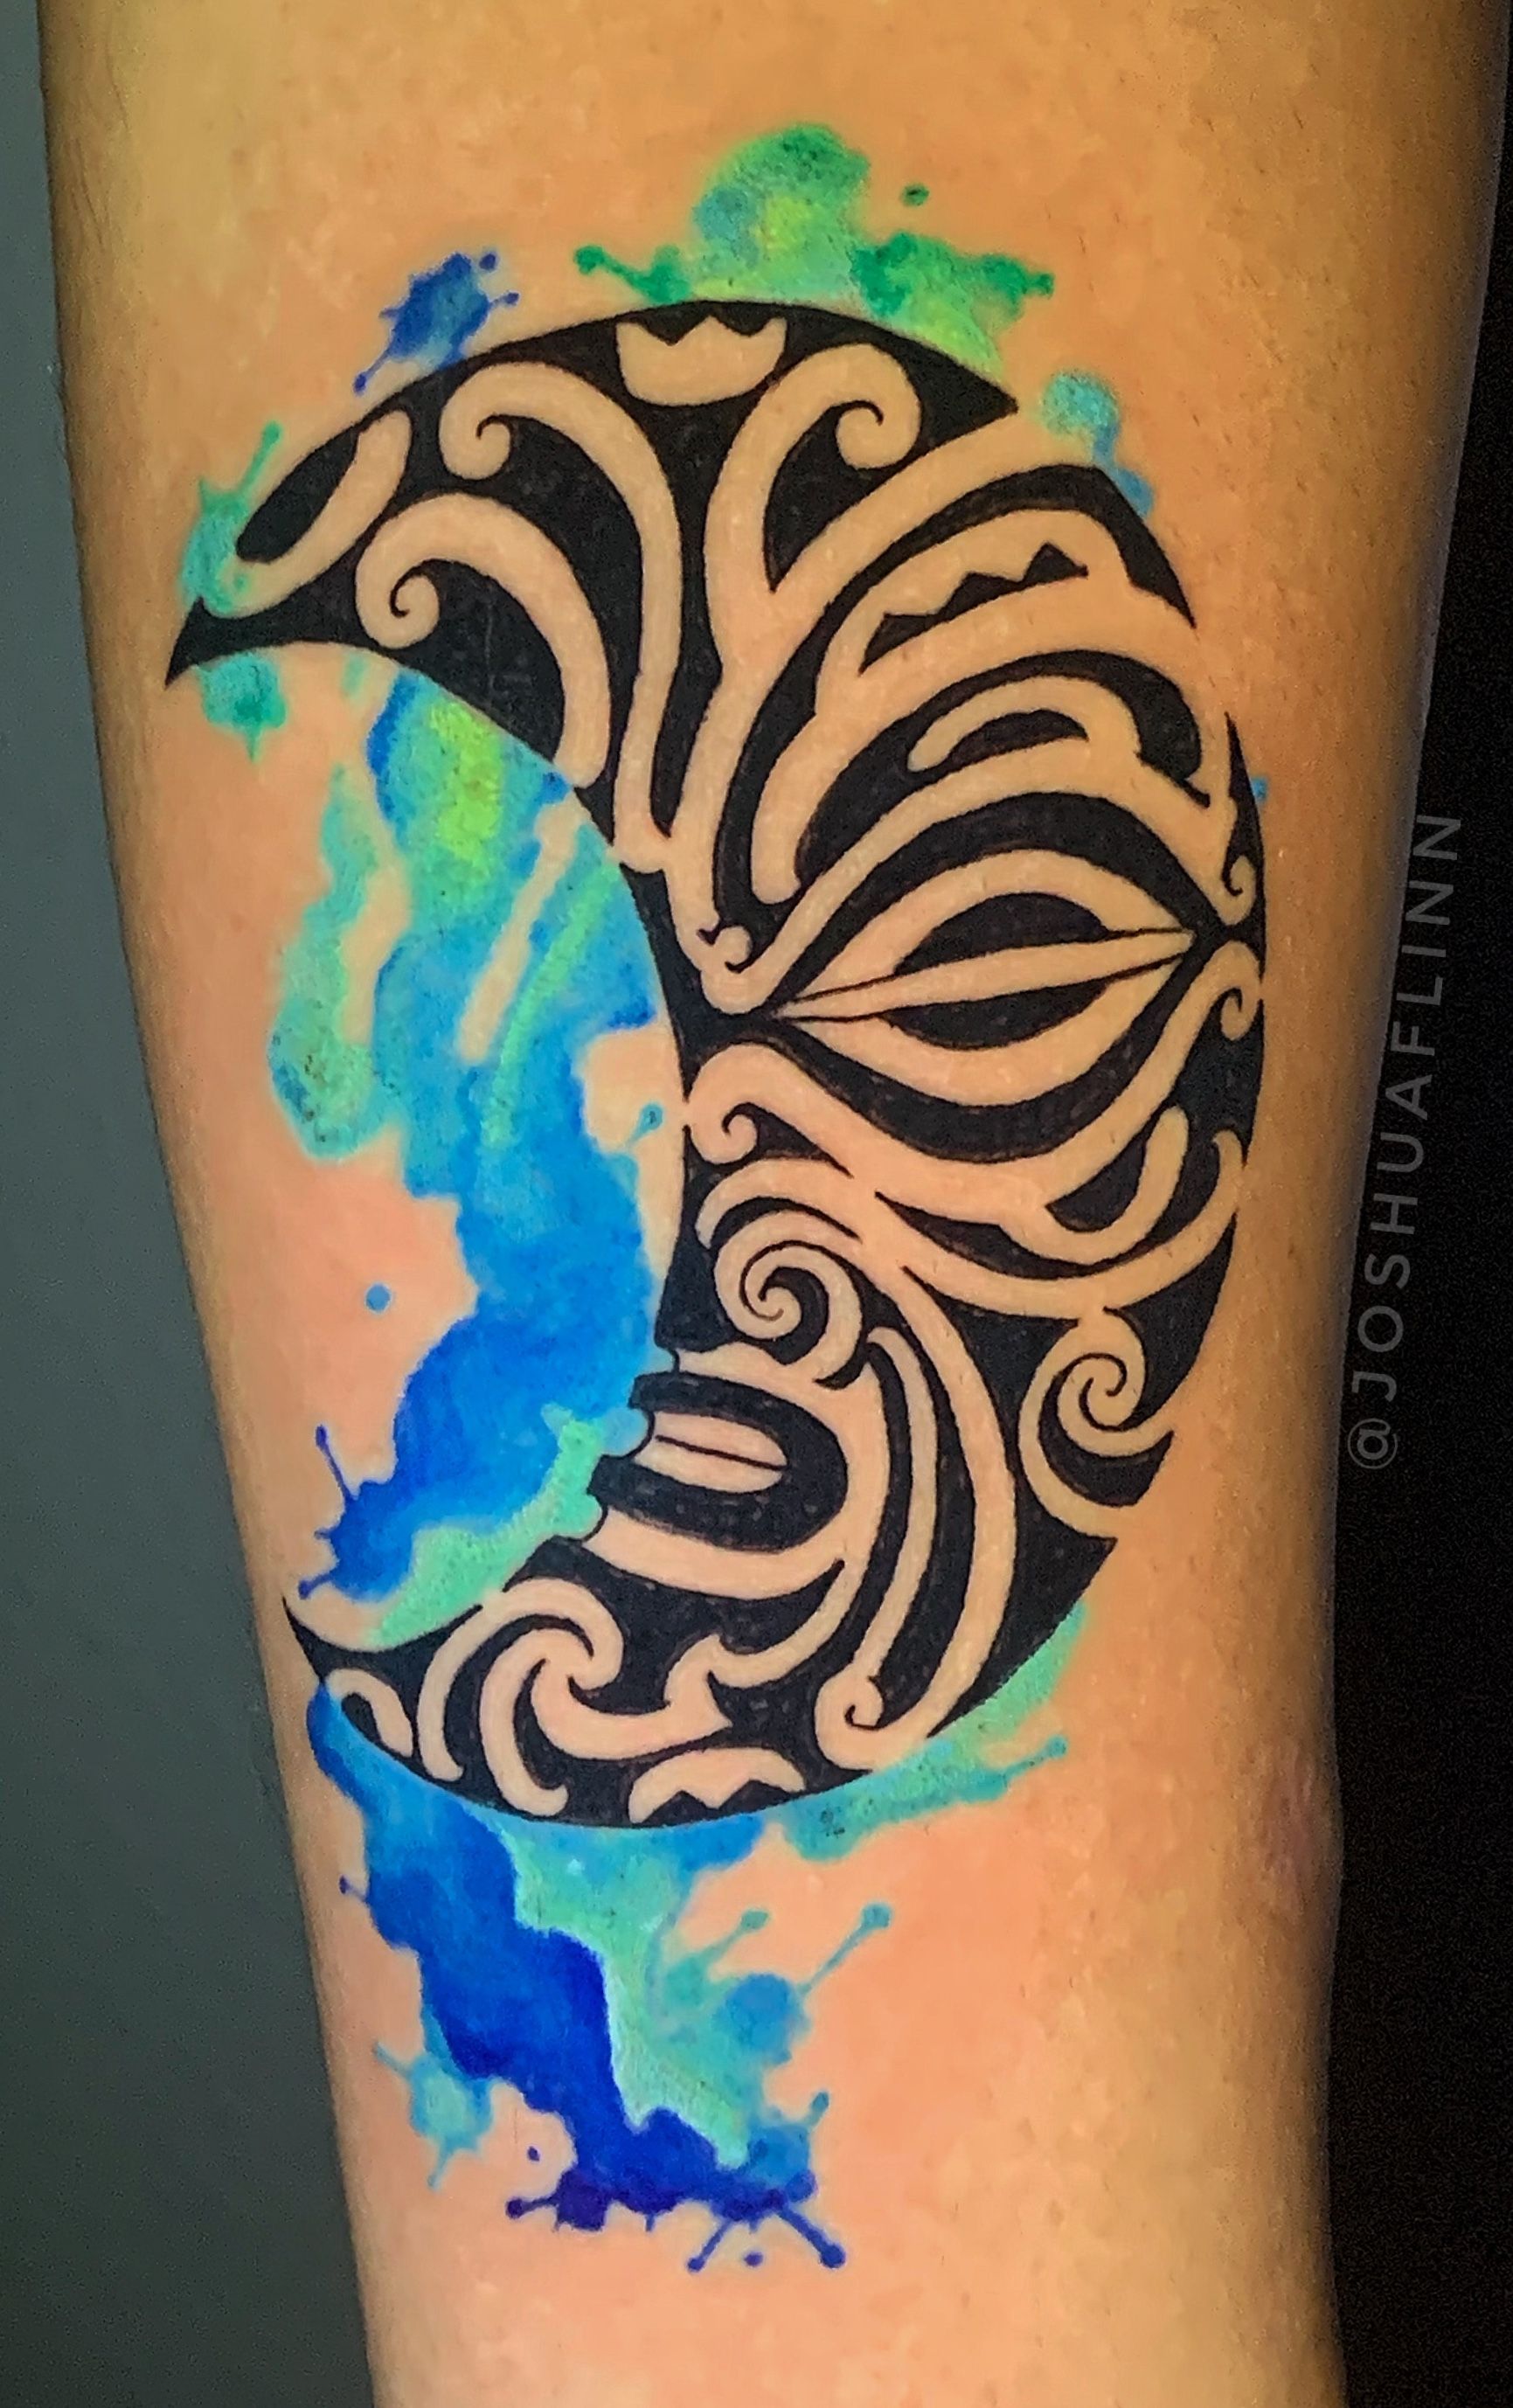 tatoo - luna maori by iaiapranzetti on DeviantArt